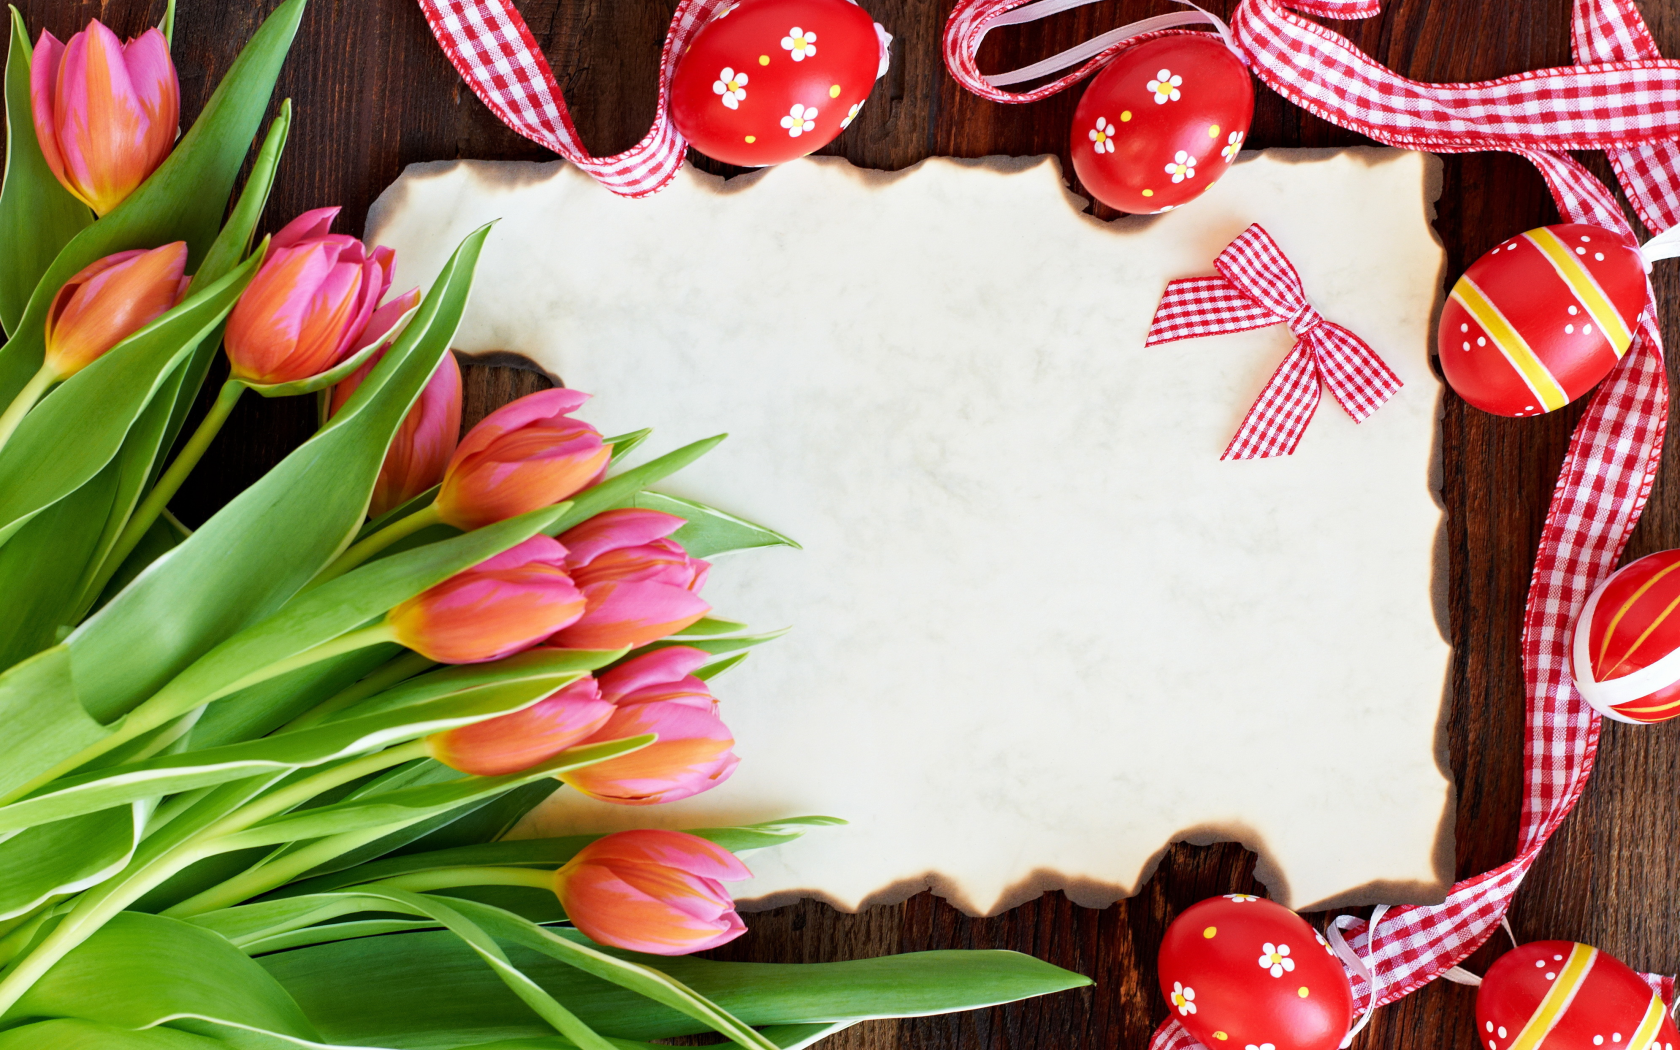 eggs, flowers, red, card, tulips, пасха, easter, тюльпаны